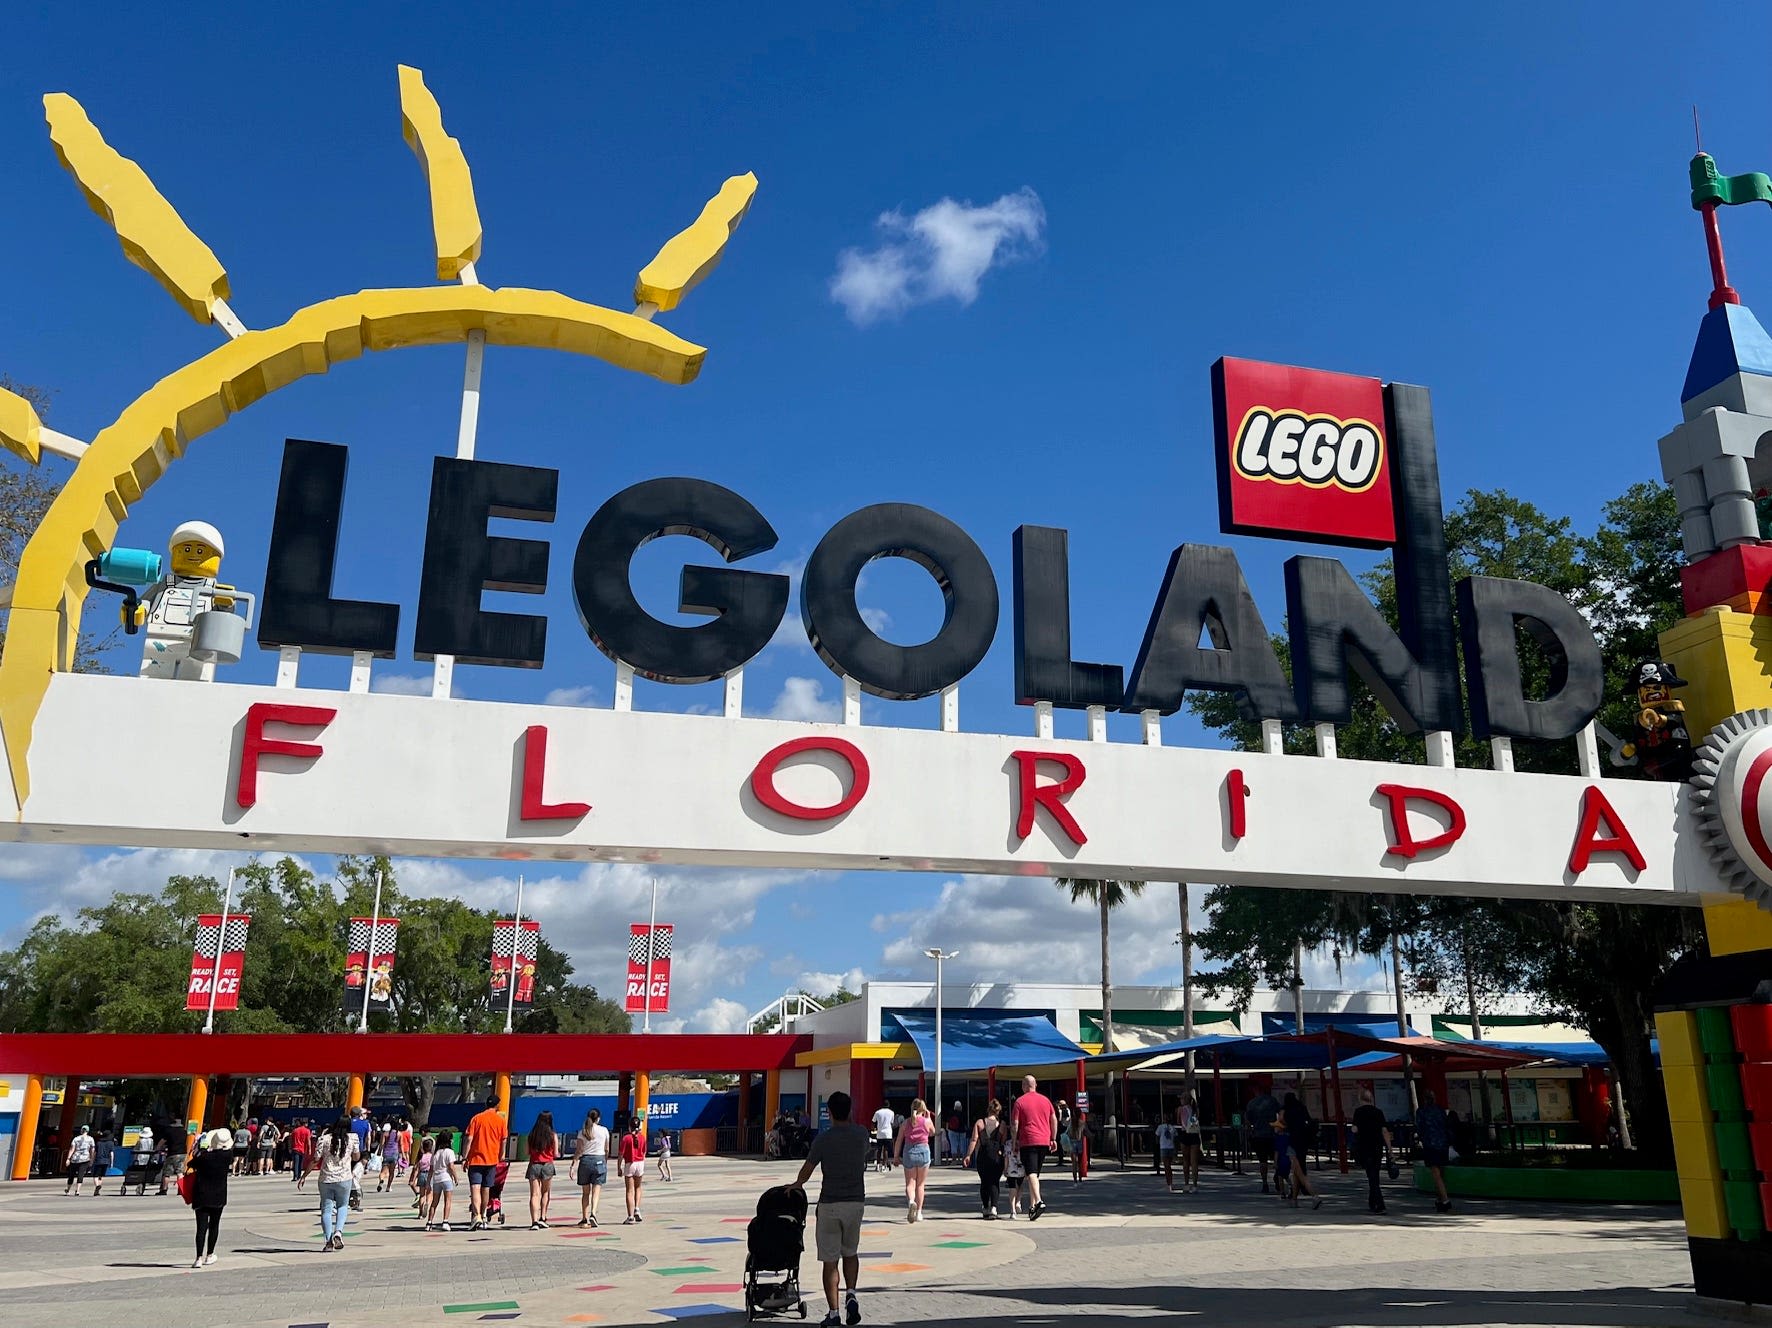 Legoland Florida kicks off Summer Brick Party with $29 kids' passes